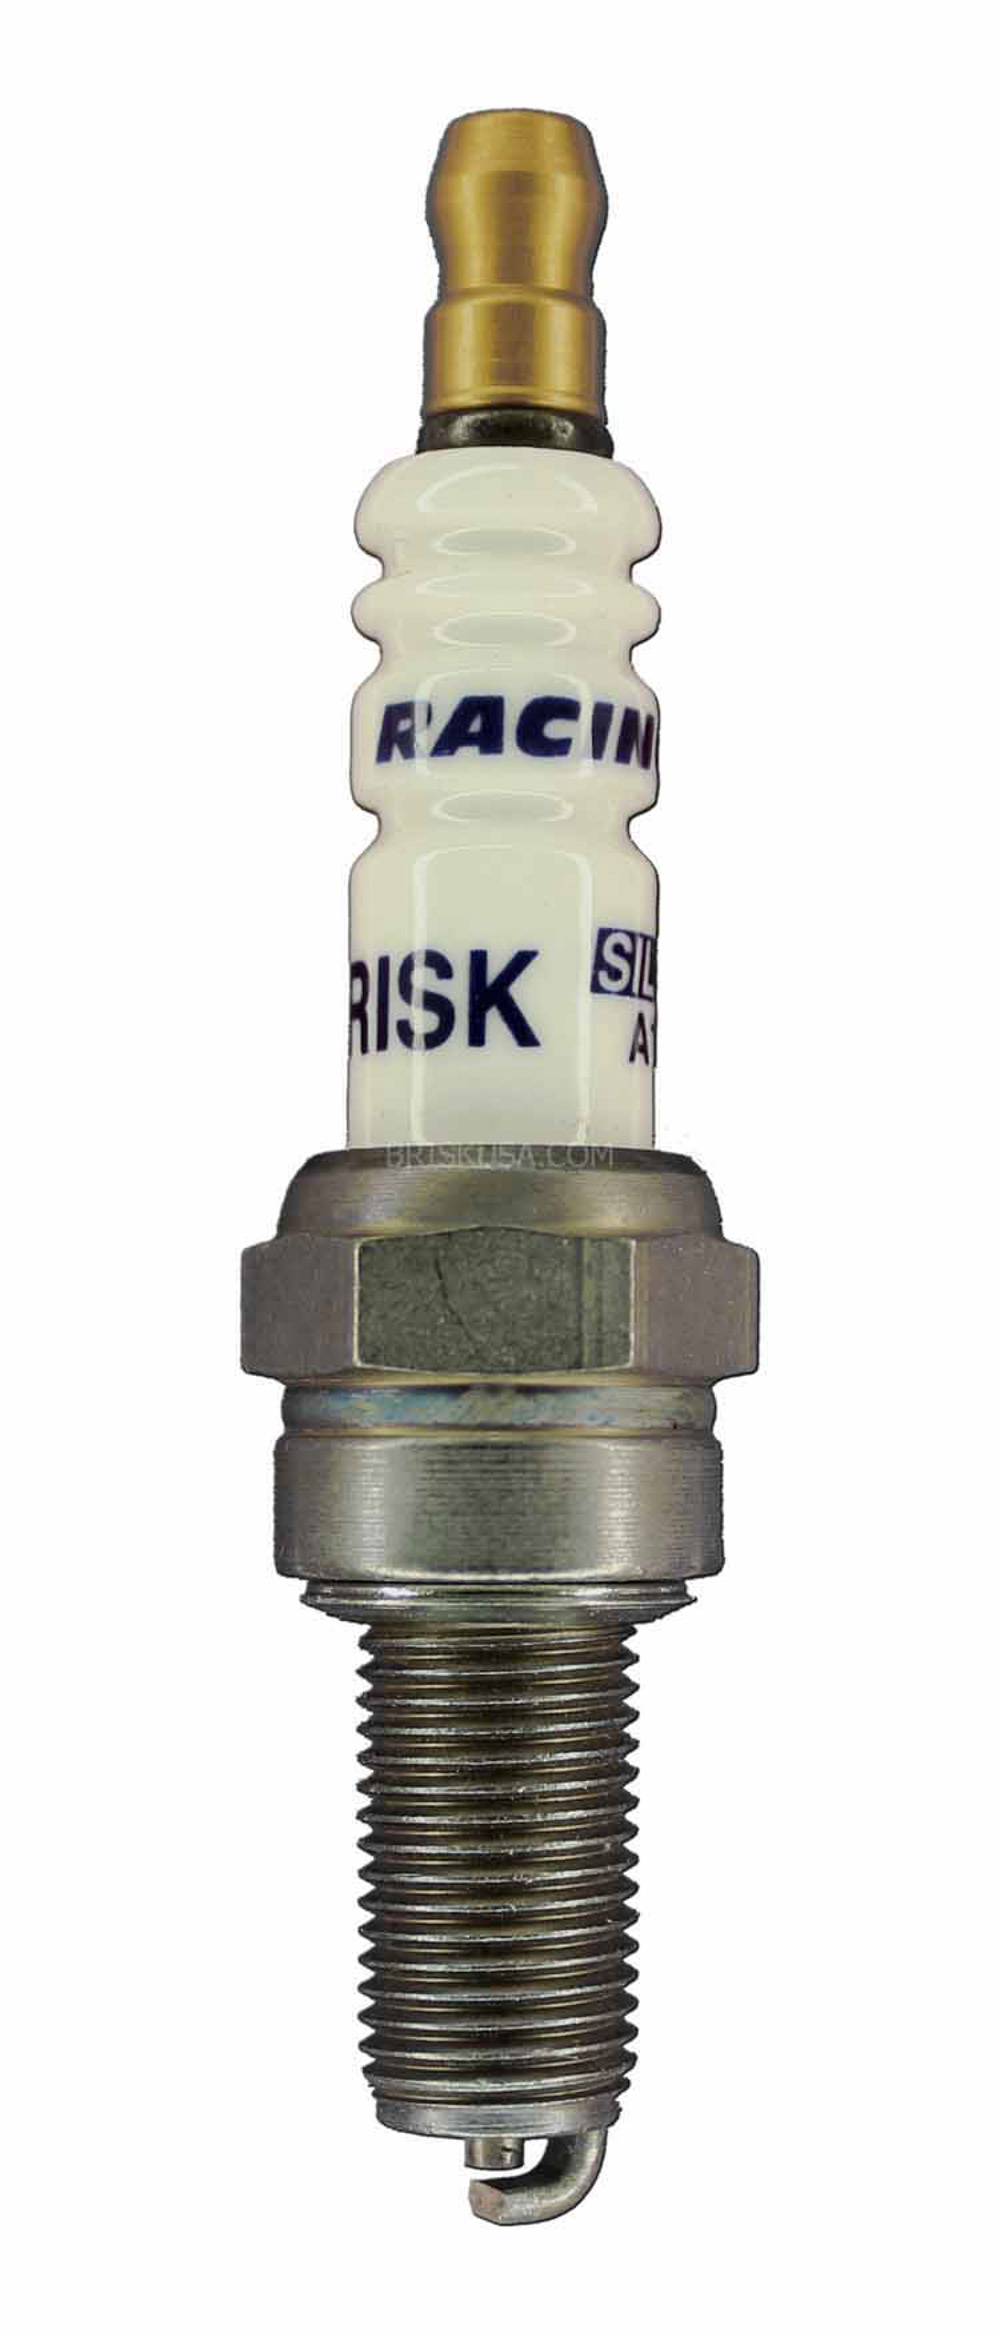 Brisk Racing Plugs A10S Spark Plug, Silver Racing, 10 mm Thread, 19 mm Reach, Heat Range 10, Gasket Seat, Non-Resistor, Each